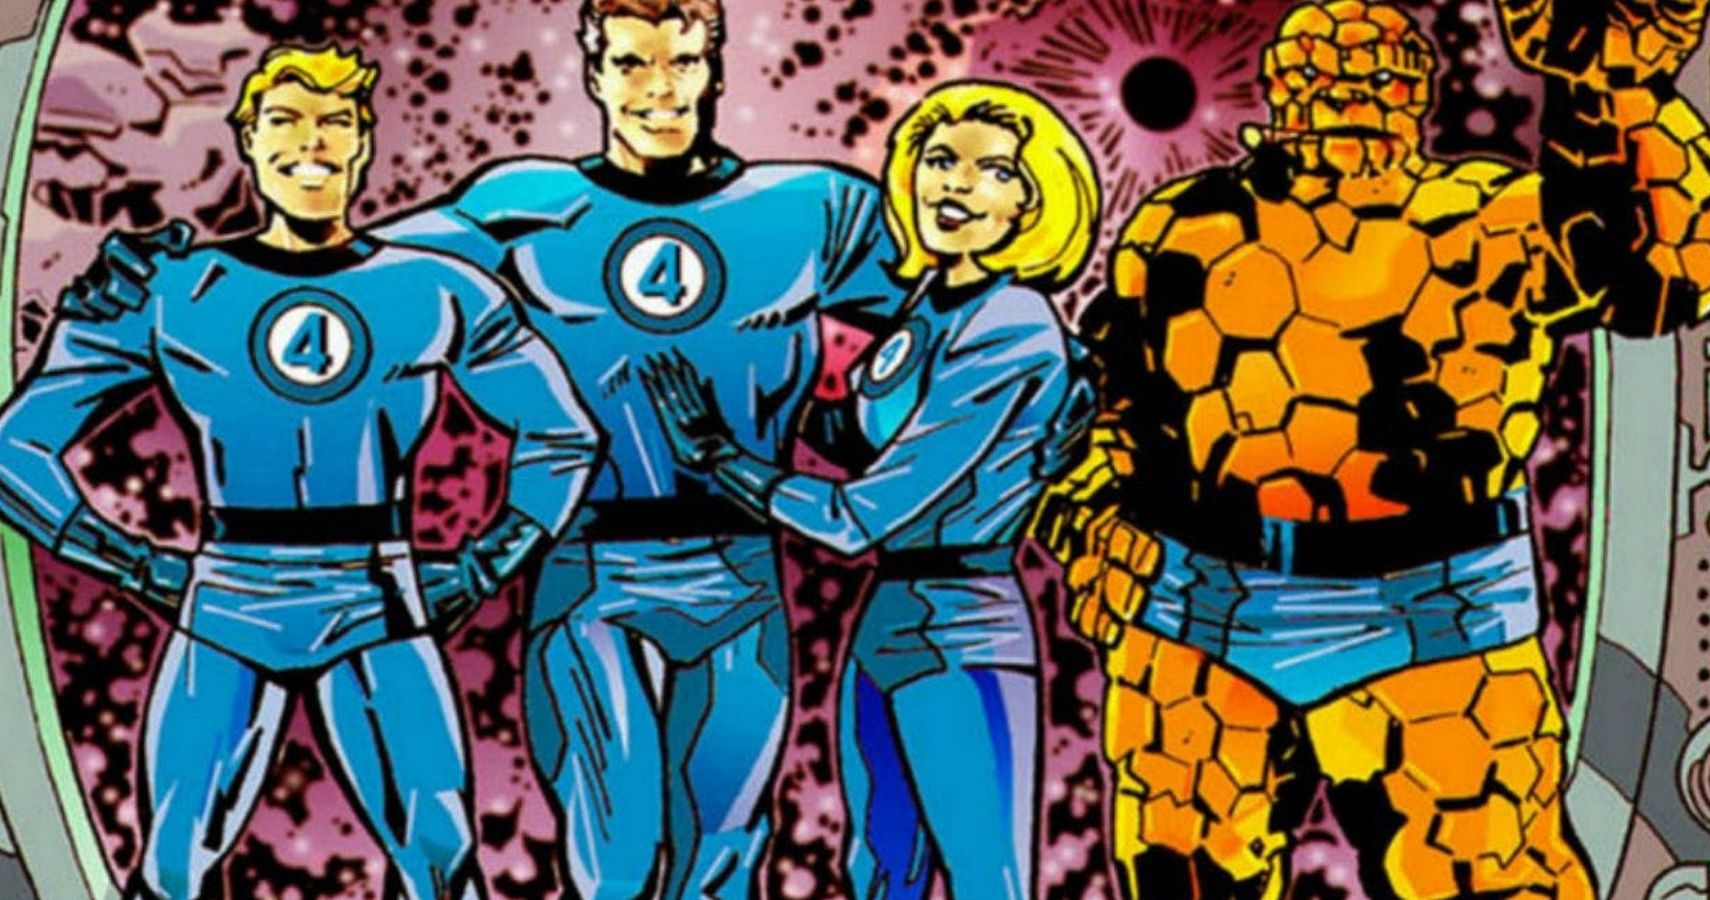 Fantastic Four comic group image